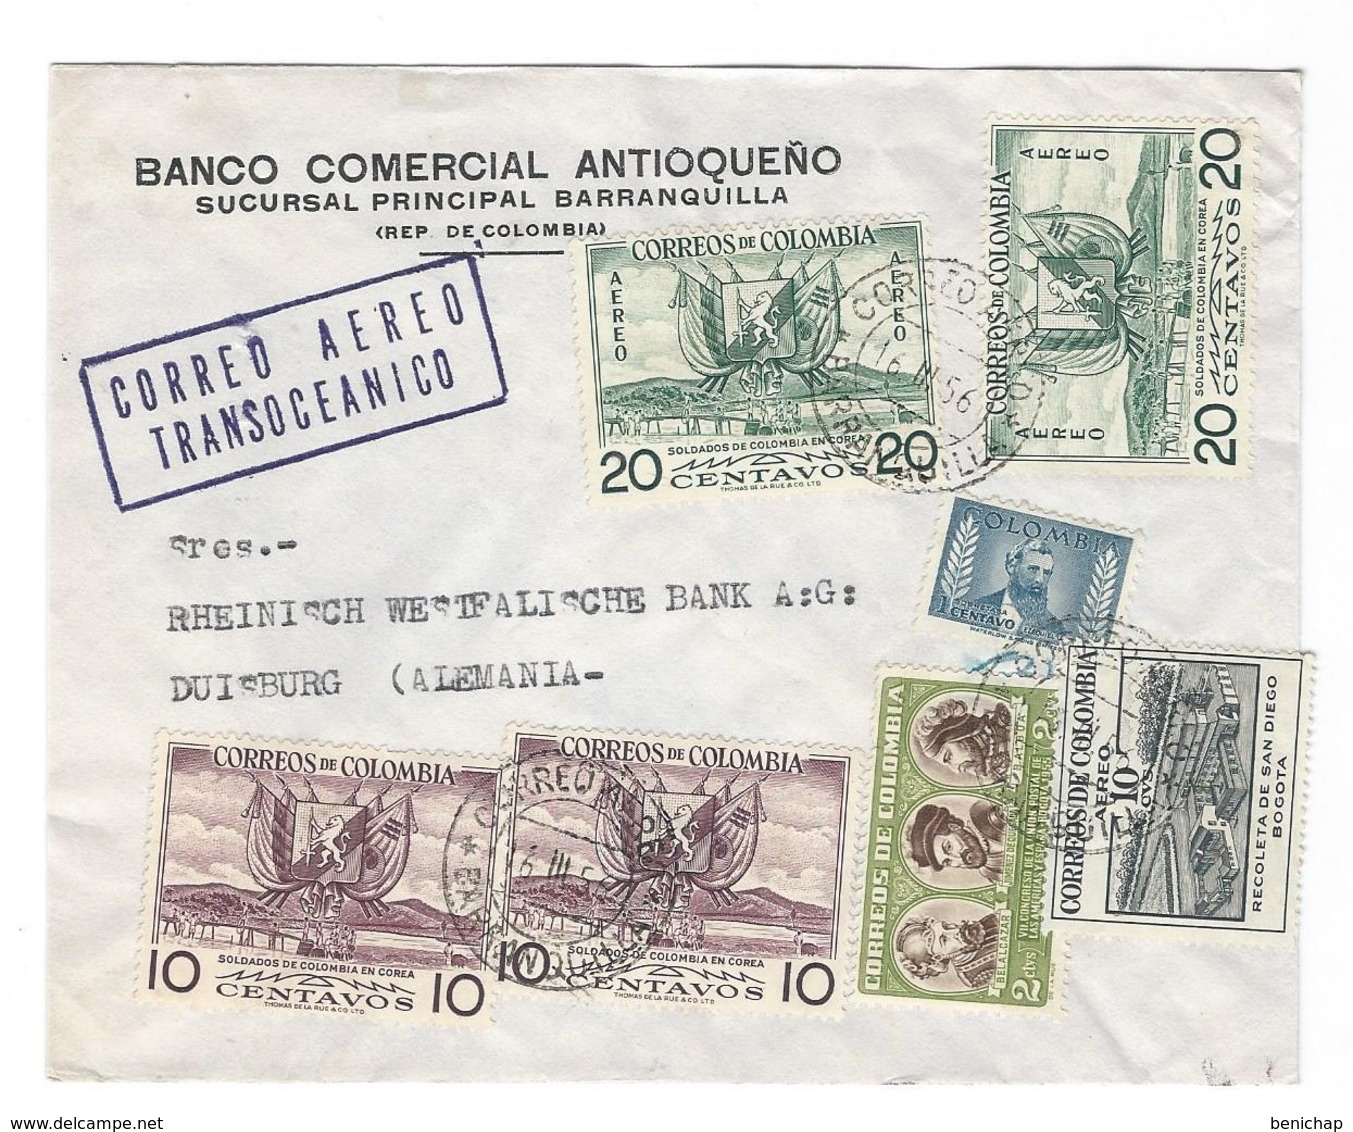 COVER CORREO COLOMBIA - AERO TRANSOCEANICO - BANCO COMERCIAL ANTIOQUENO - BARRANQUILLA - DUISBURG - GERMANY. - Colombia